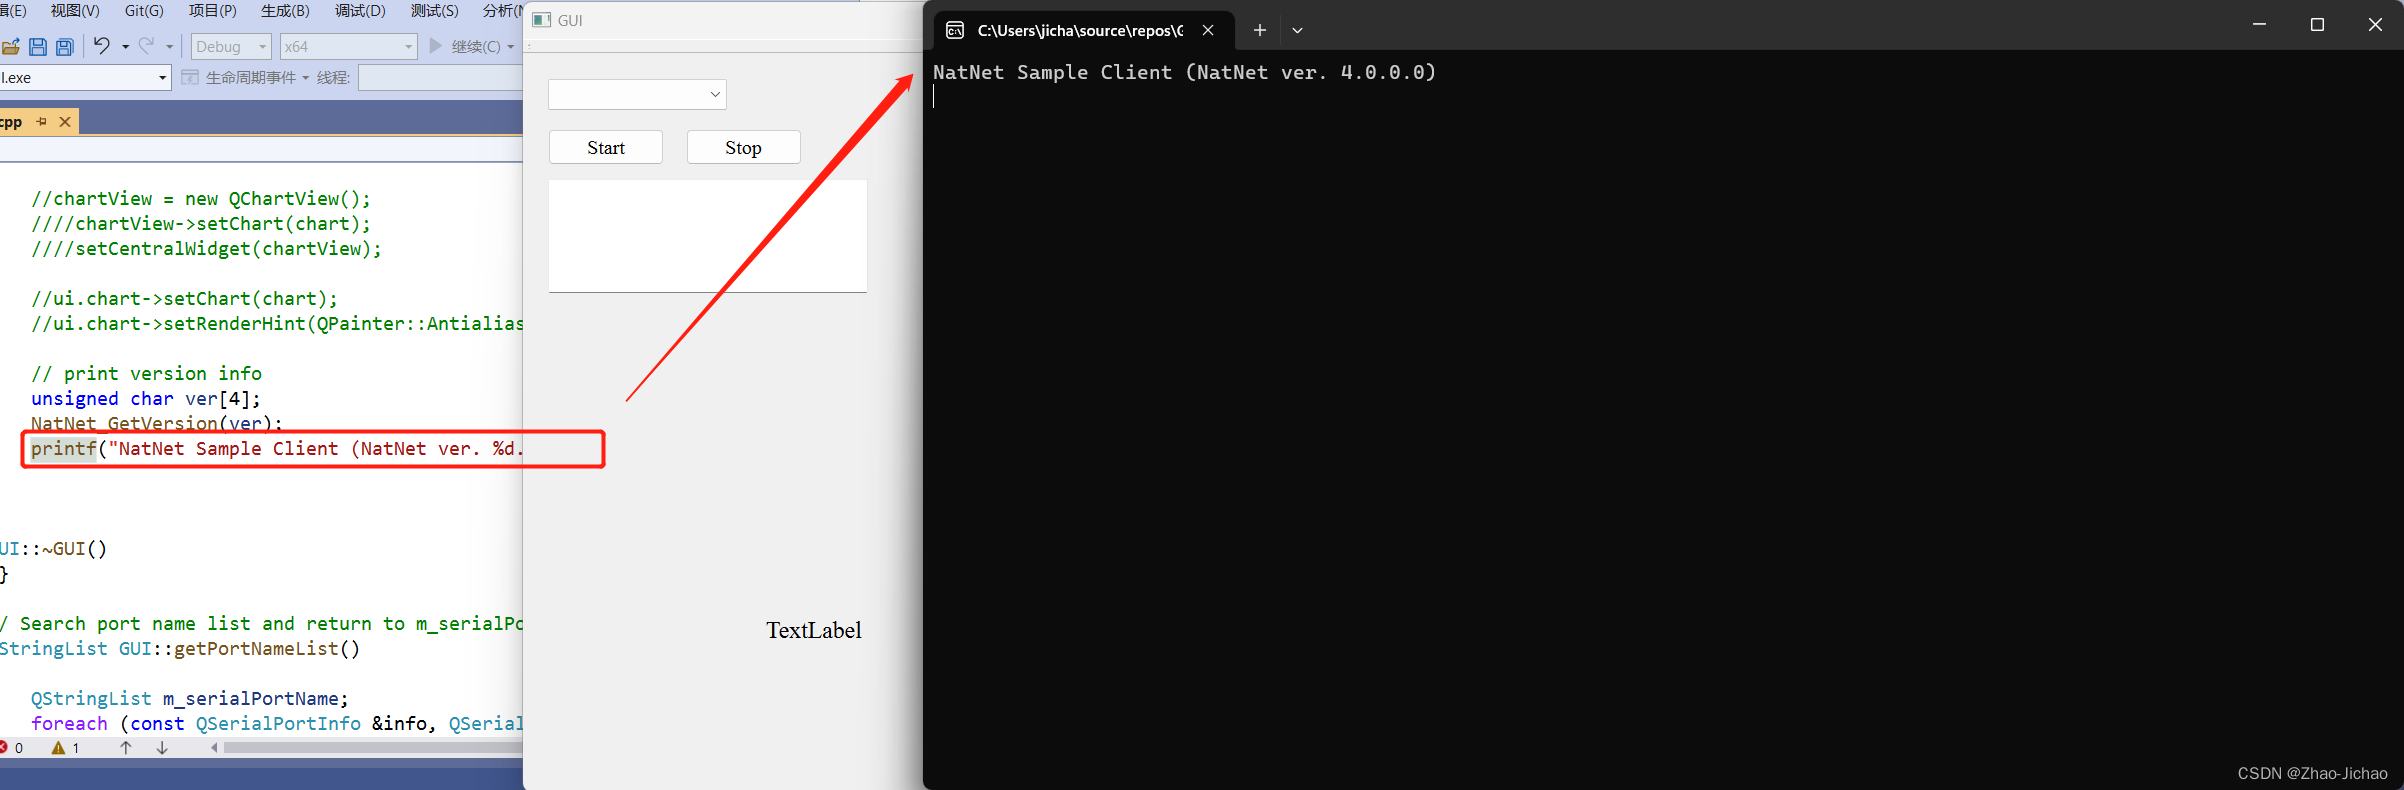 【Visual Studio】printf() 函数无输出显示问题。使用 C++ 语言，配合 Qt 开发串口通信界面